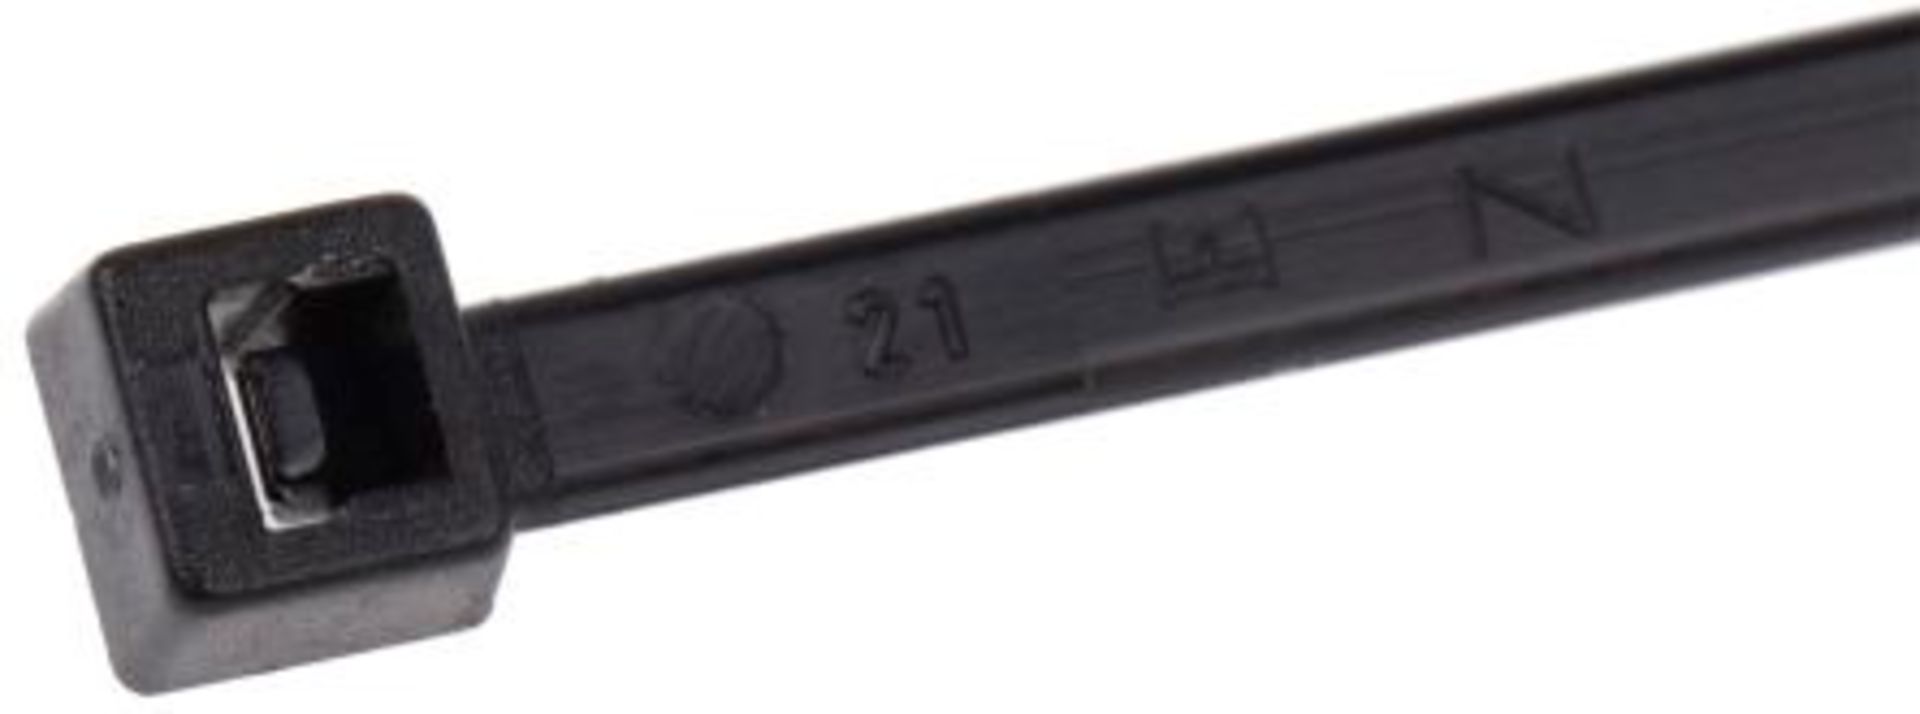 24000 x Phoenix Contact Black Nylon Cable Tie, 140mm x 3.6 mm 3008050173 - Image 2 of 3